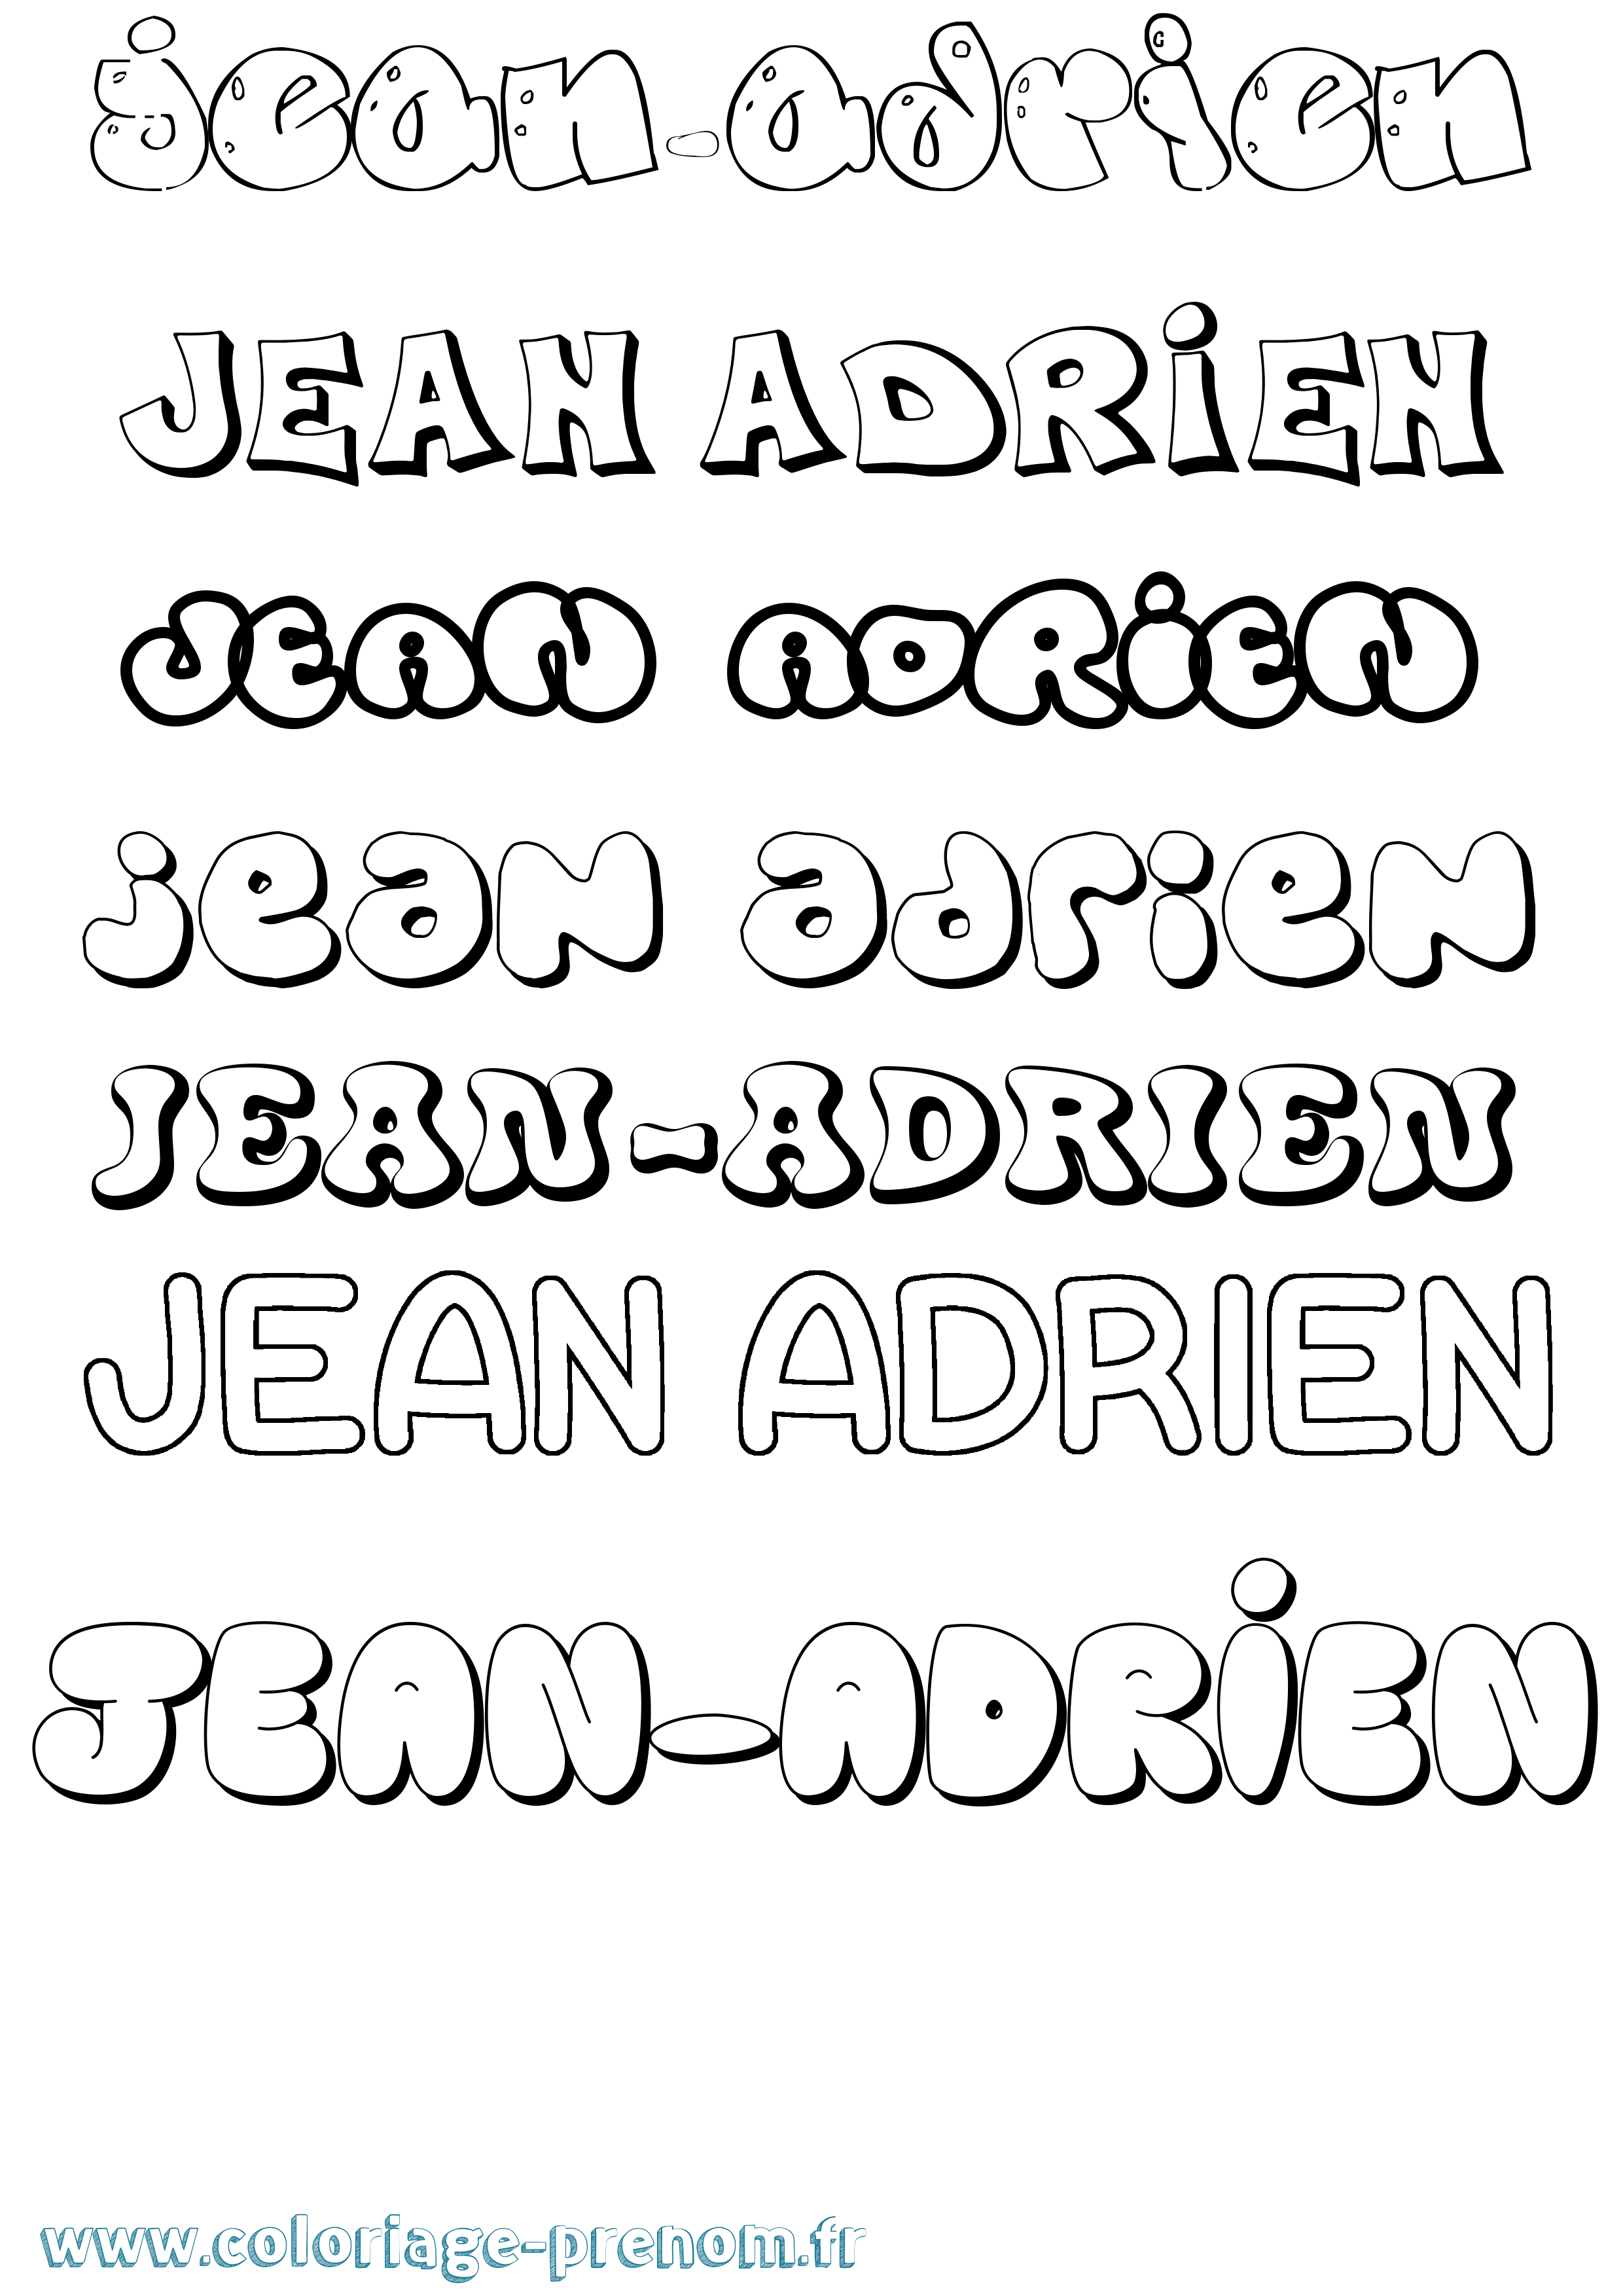 Coloriage prénom Jean-Adrien Bubble